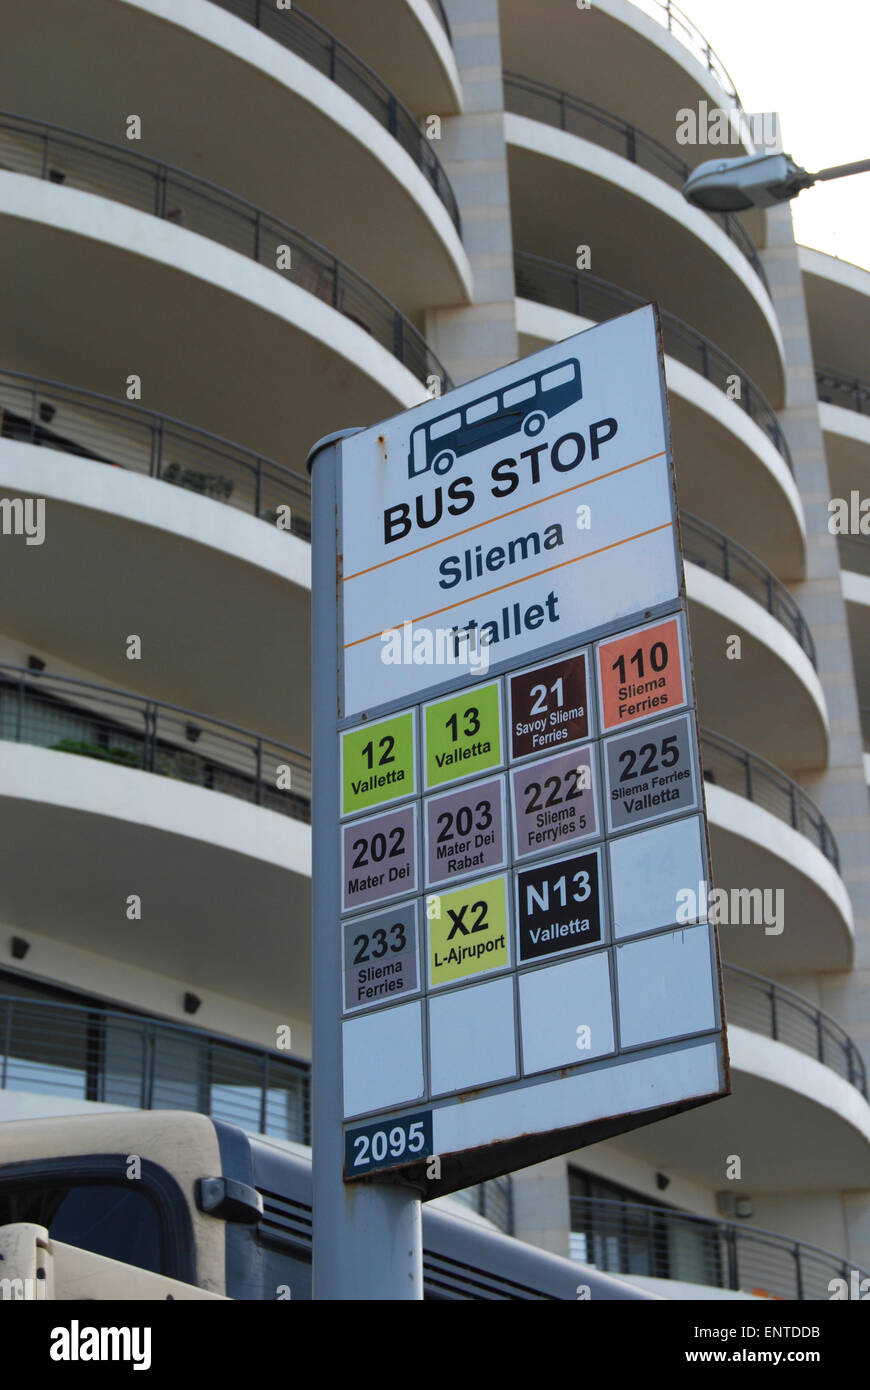 bus stop in Sliema Malta, Europe Stock Photo